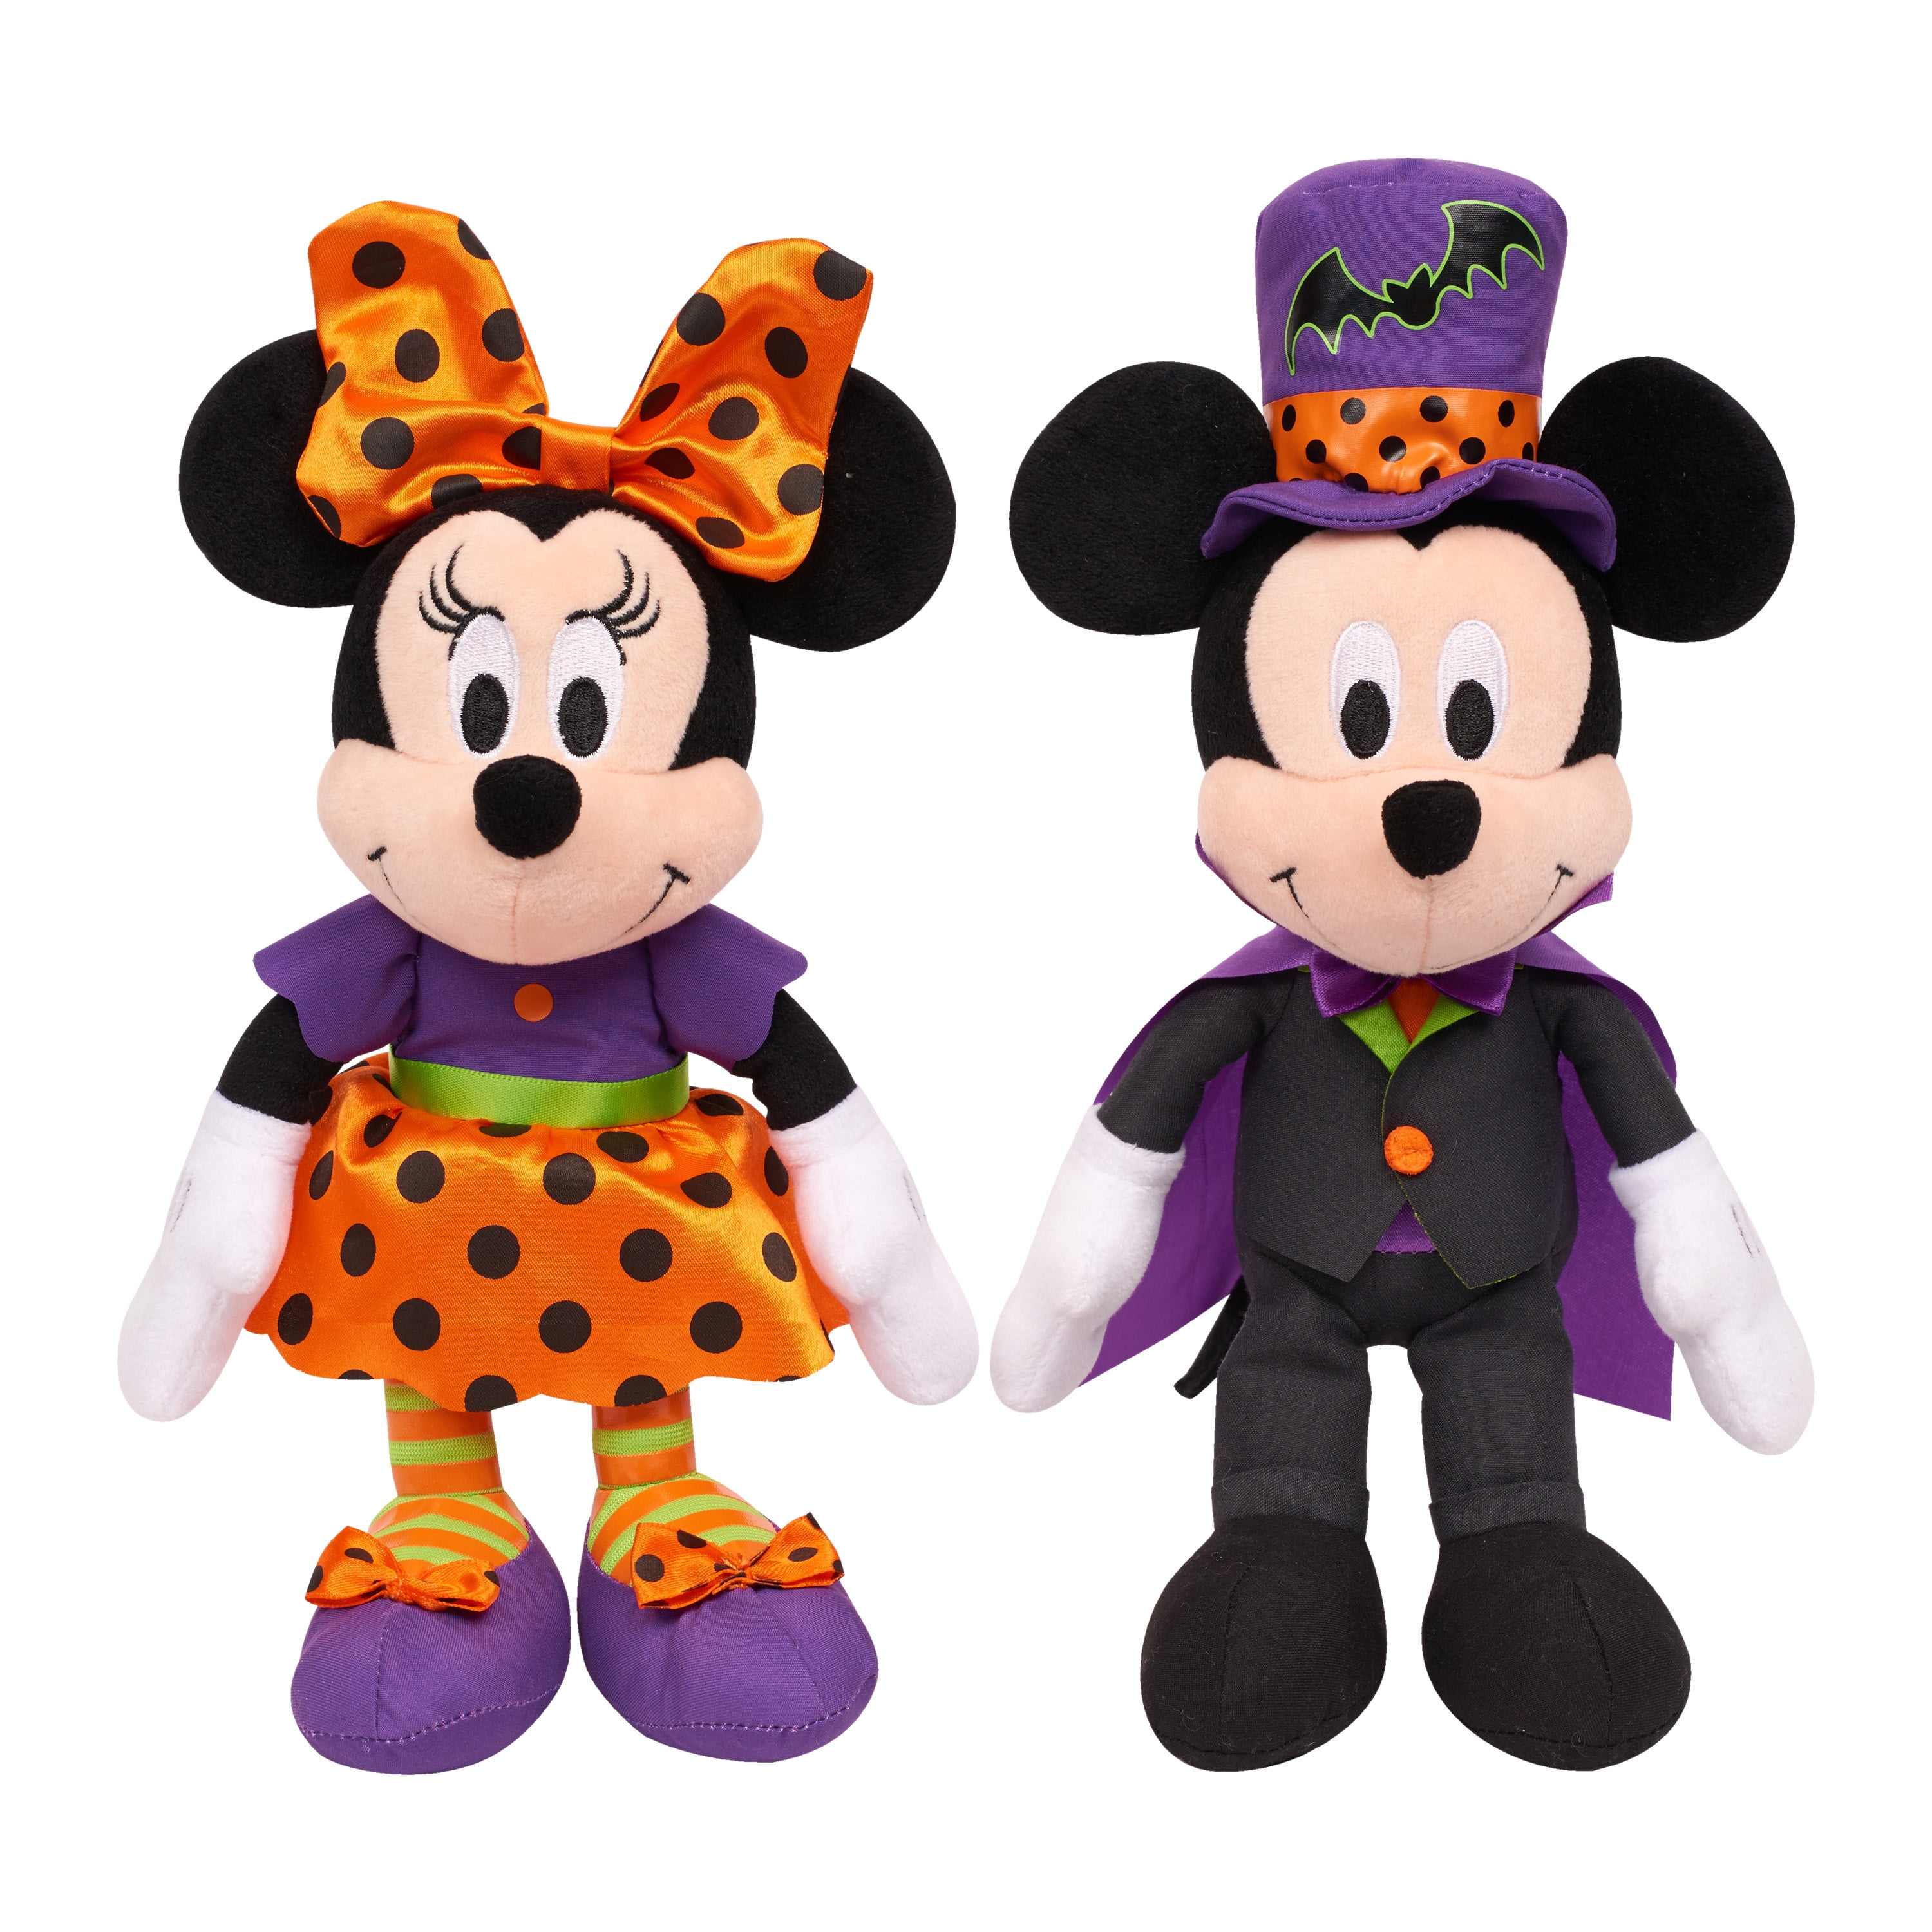 Set 2 Disney Halloween Plush Toy Mickey Mouse & Minnie Mouse Stuffed Animal 12" 